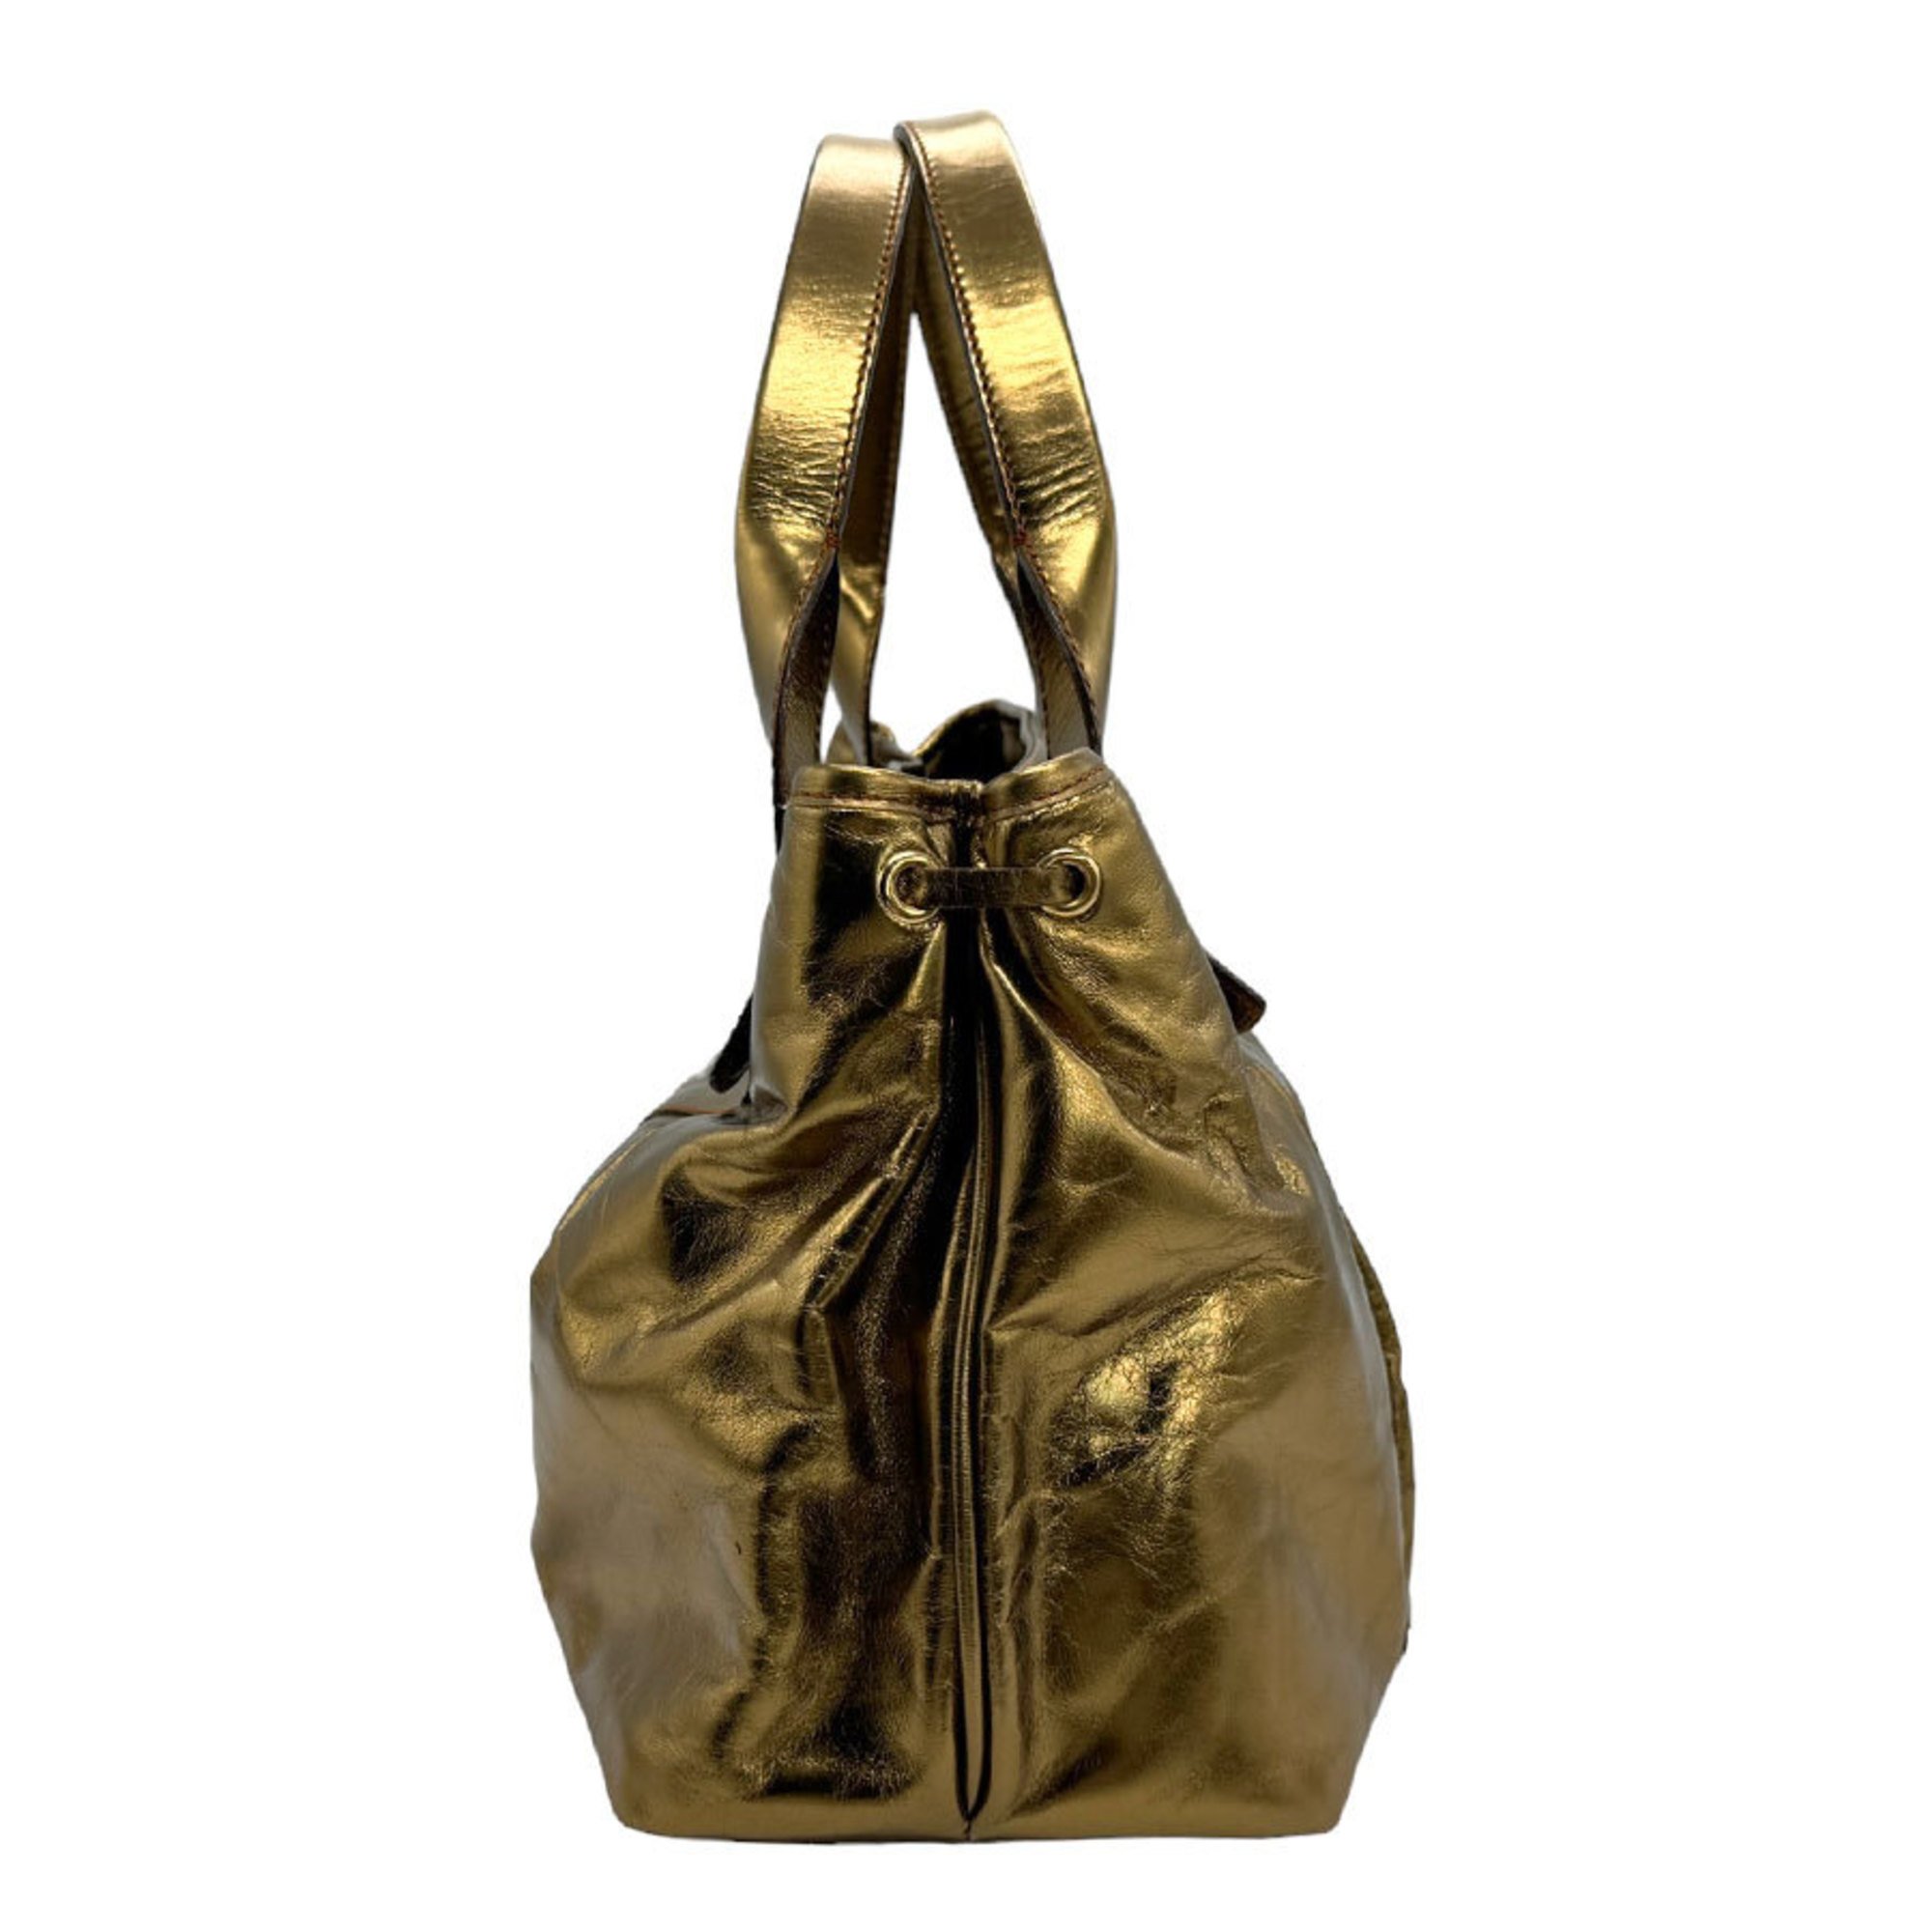 MARC JACOBS handbag tote bag leather gold ladies z1453